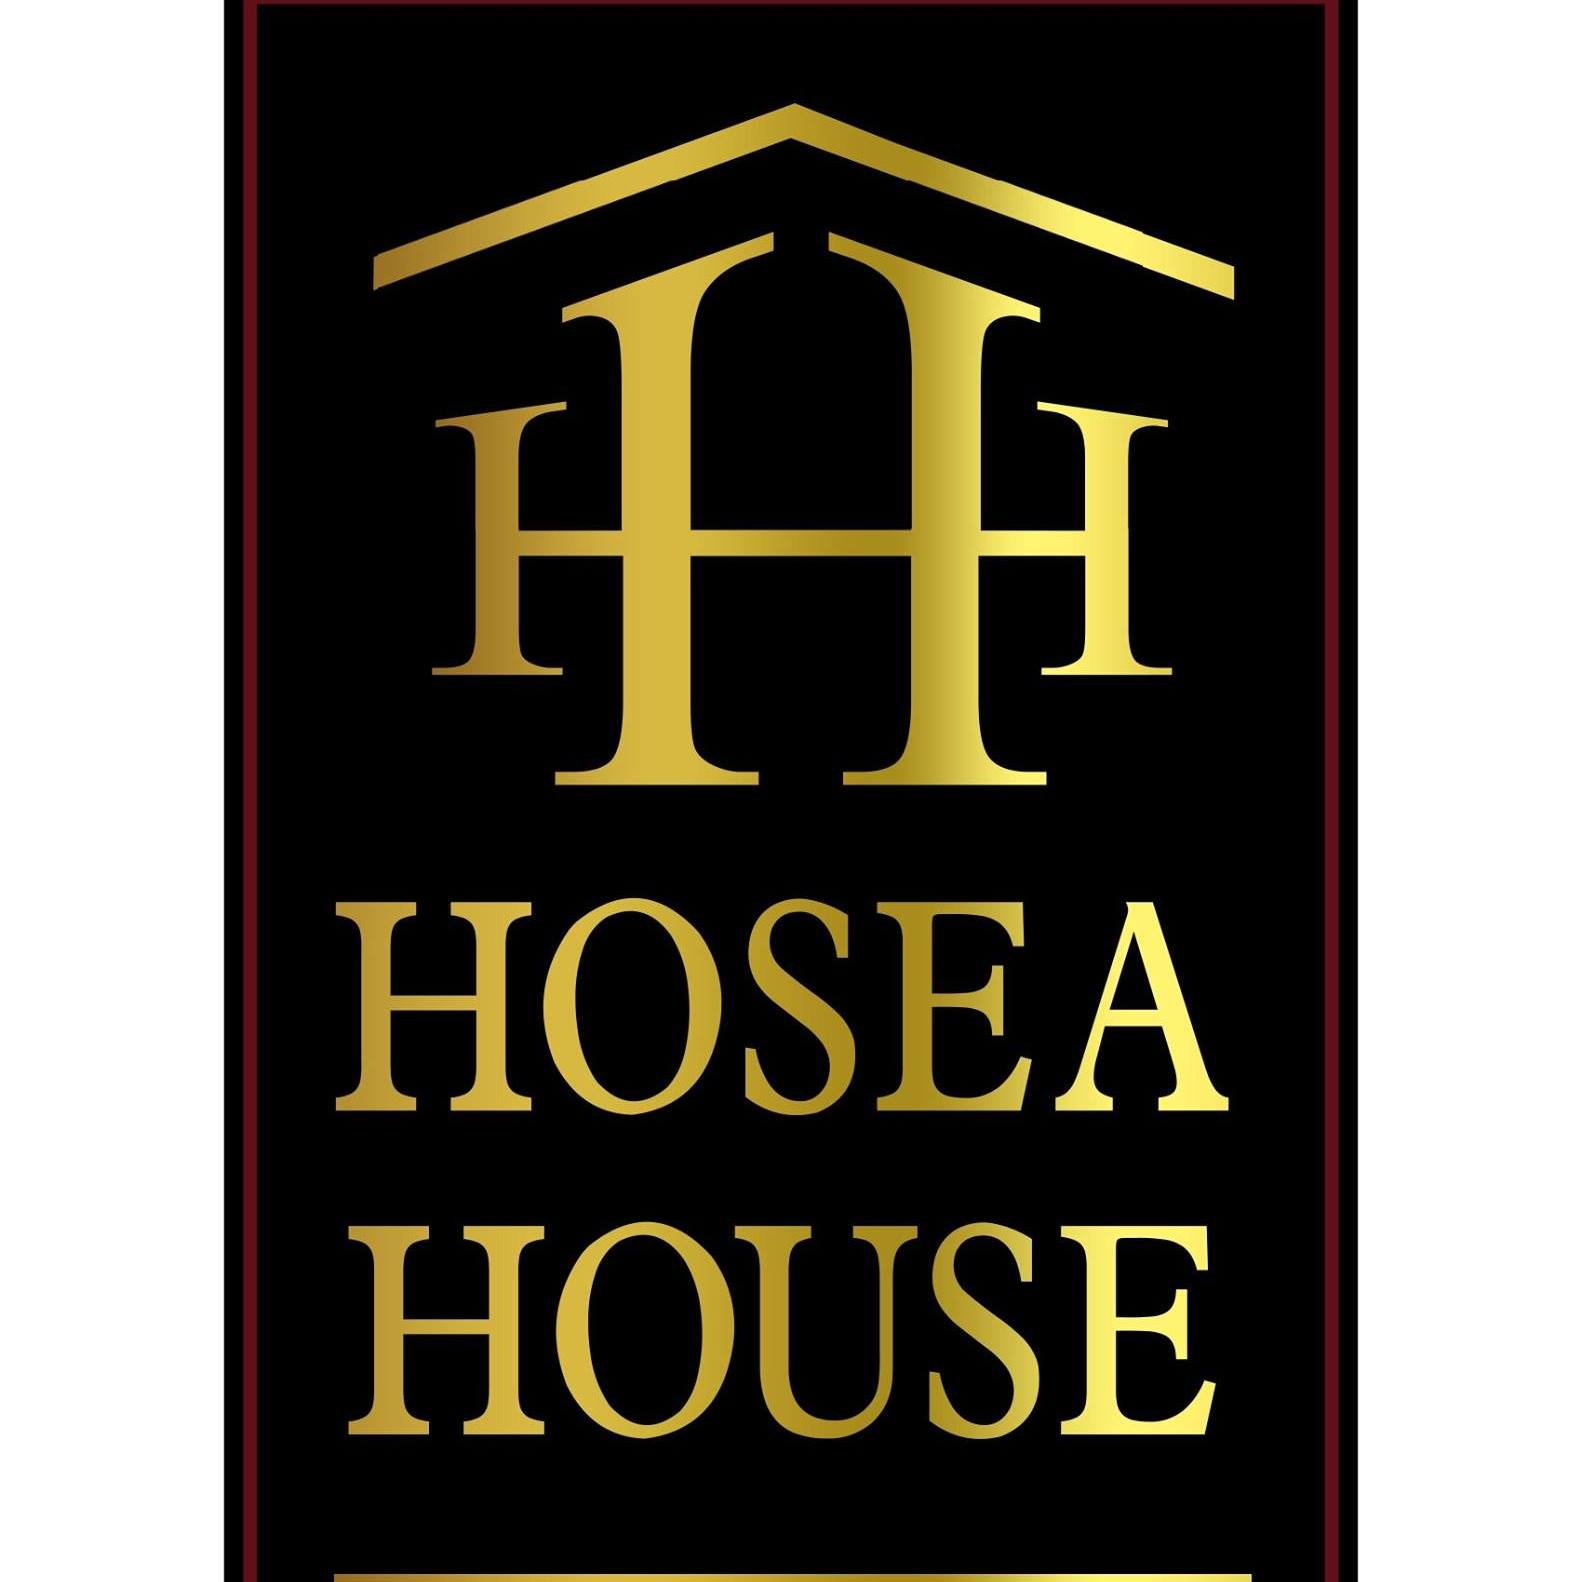 Hosea House